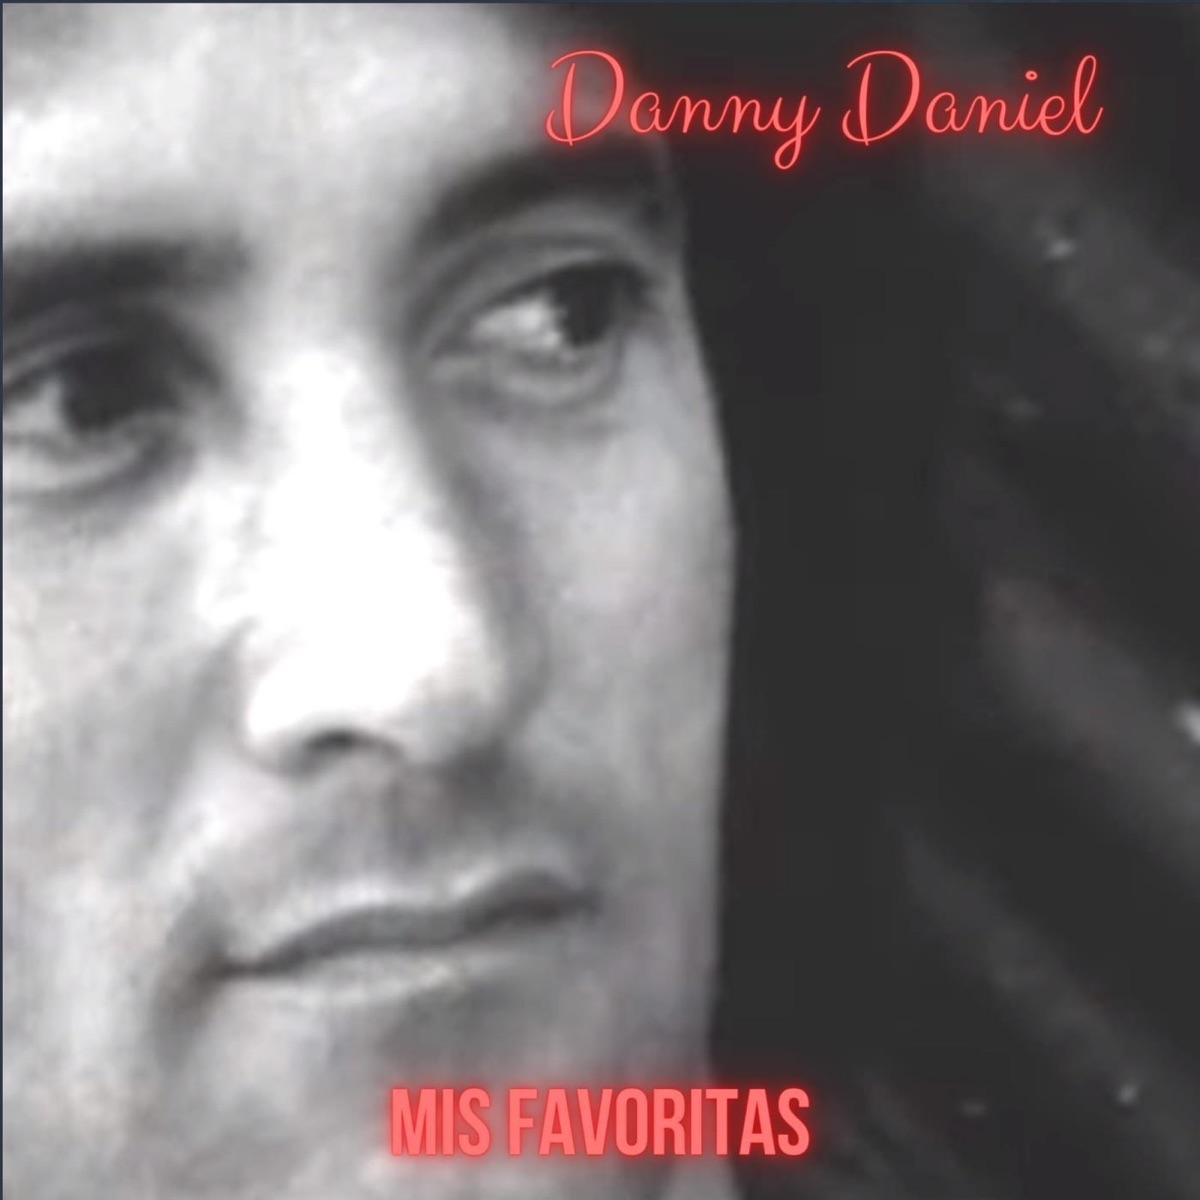 Lo Mejor De Danny Daniel de Danny Daniel en Apple Music